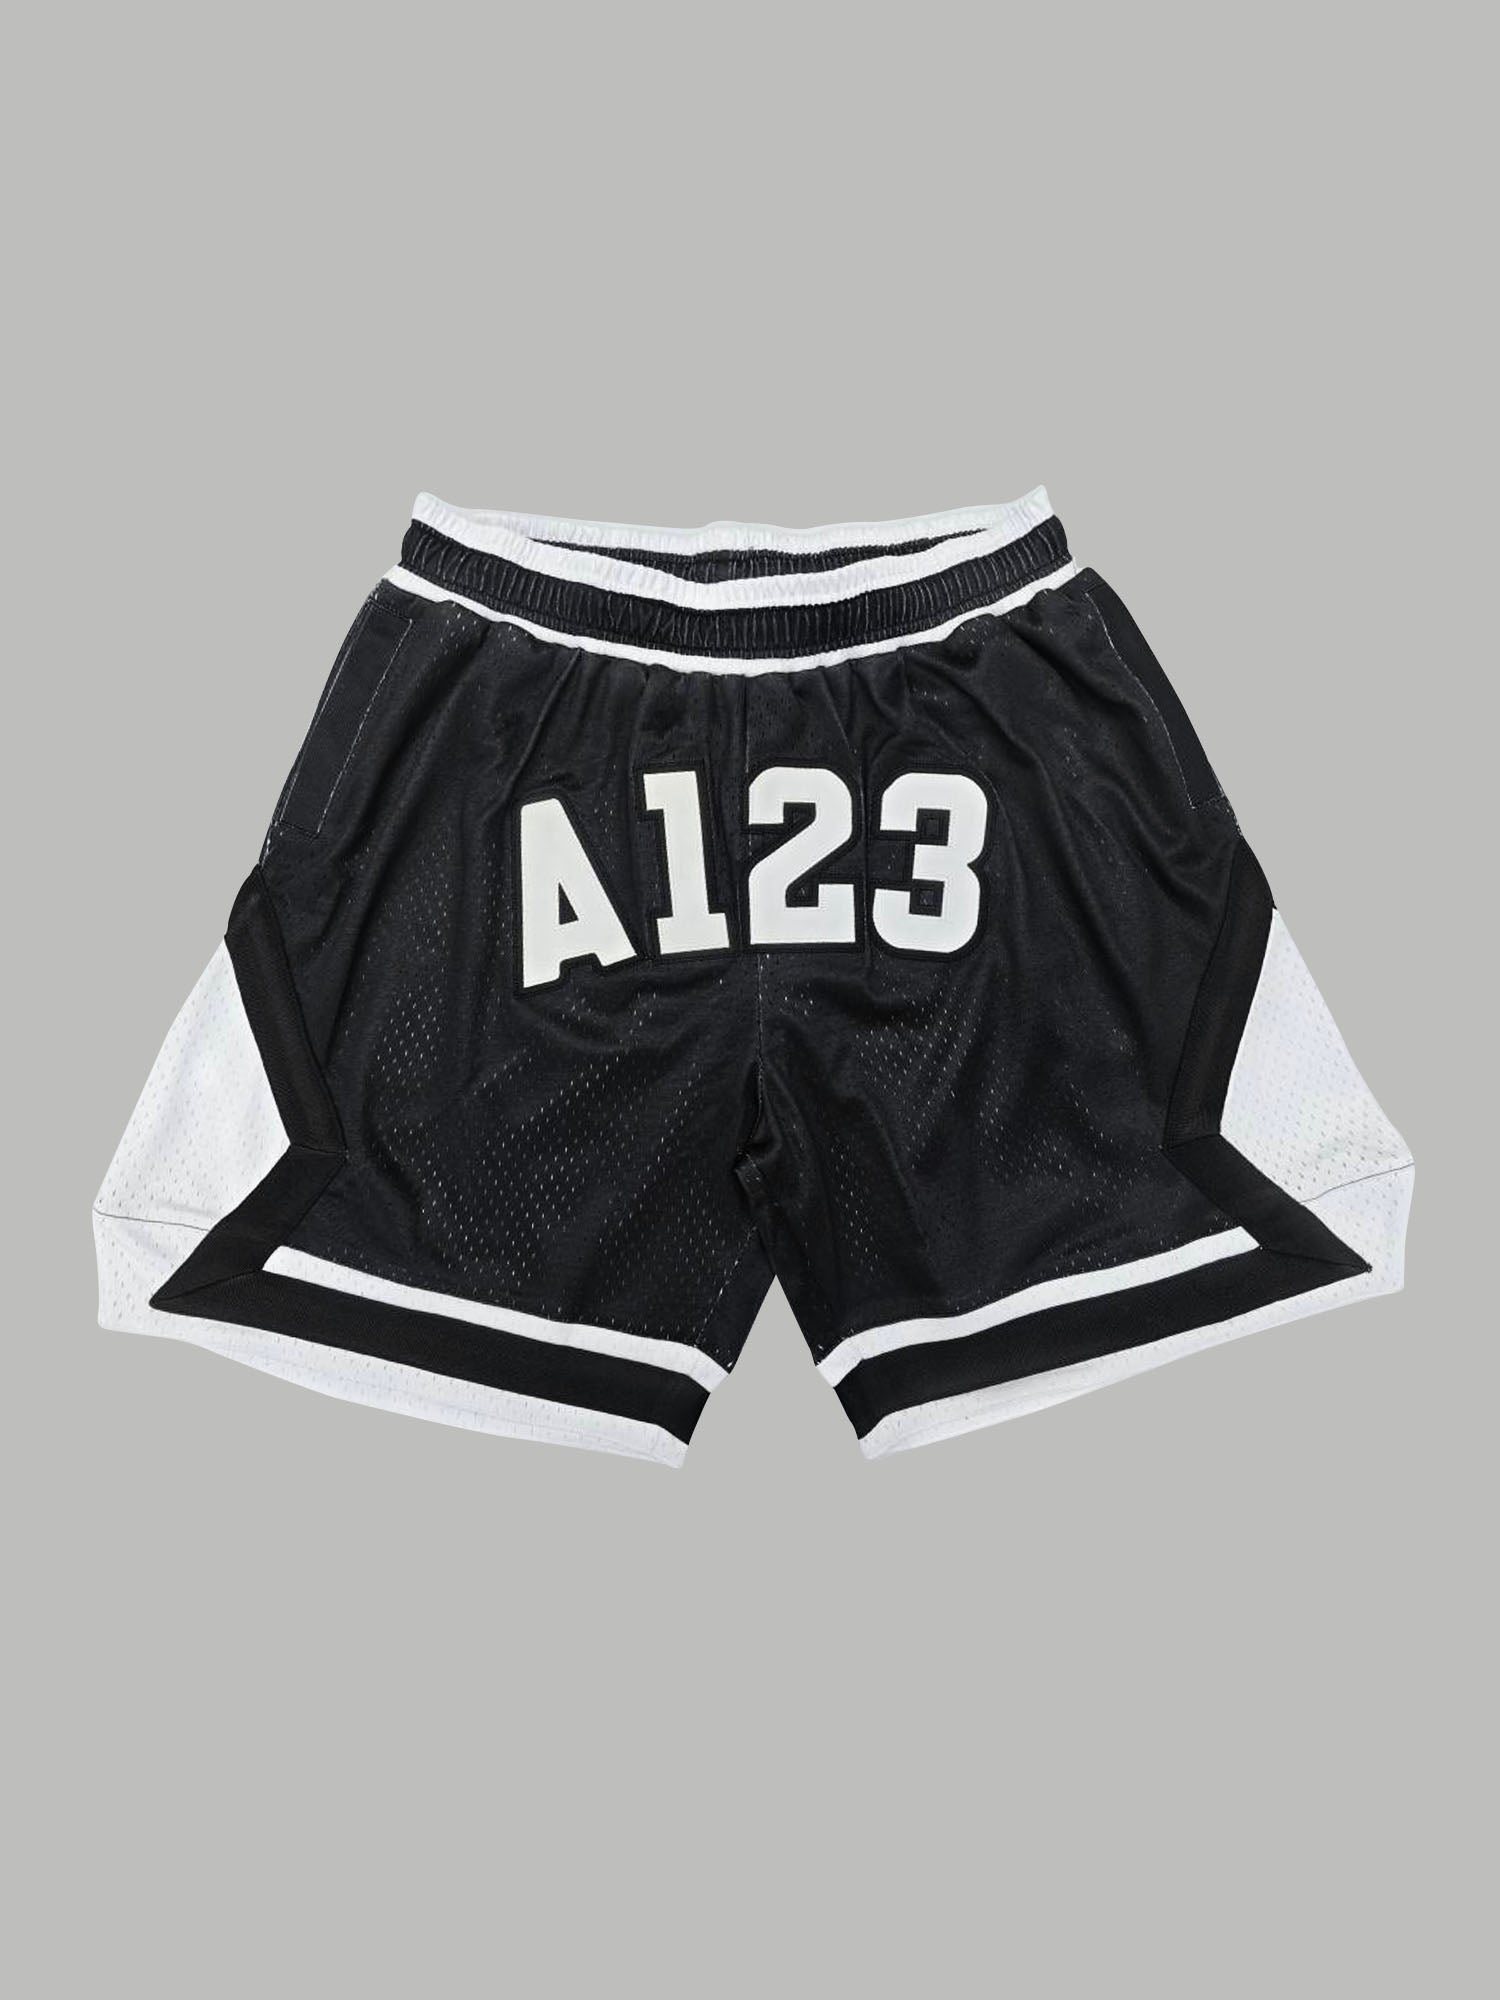 A123 Shorts